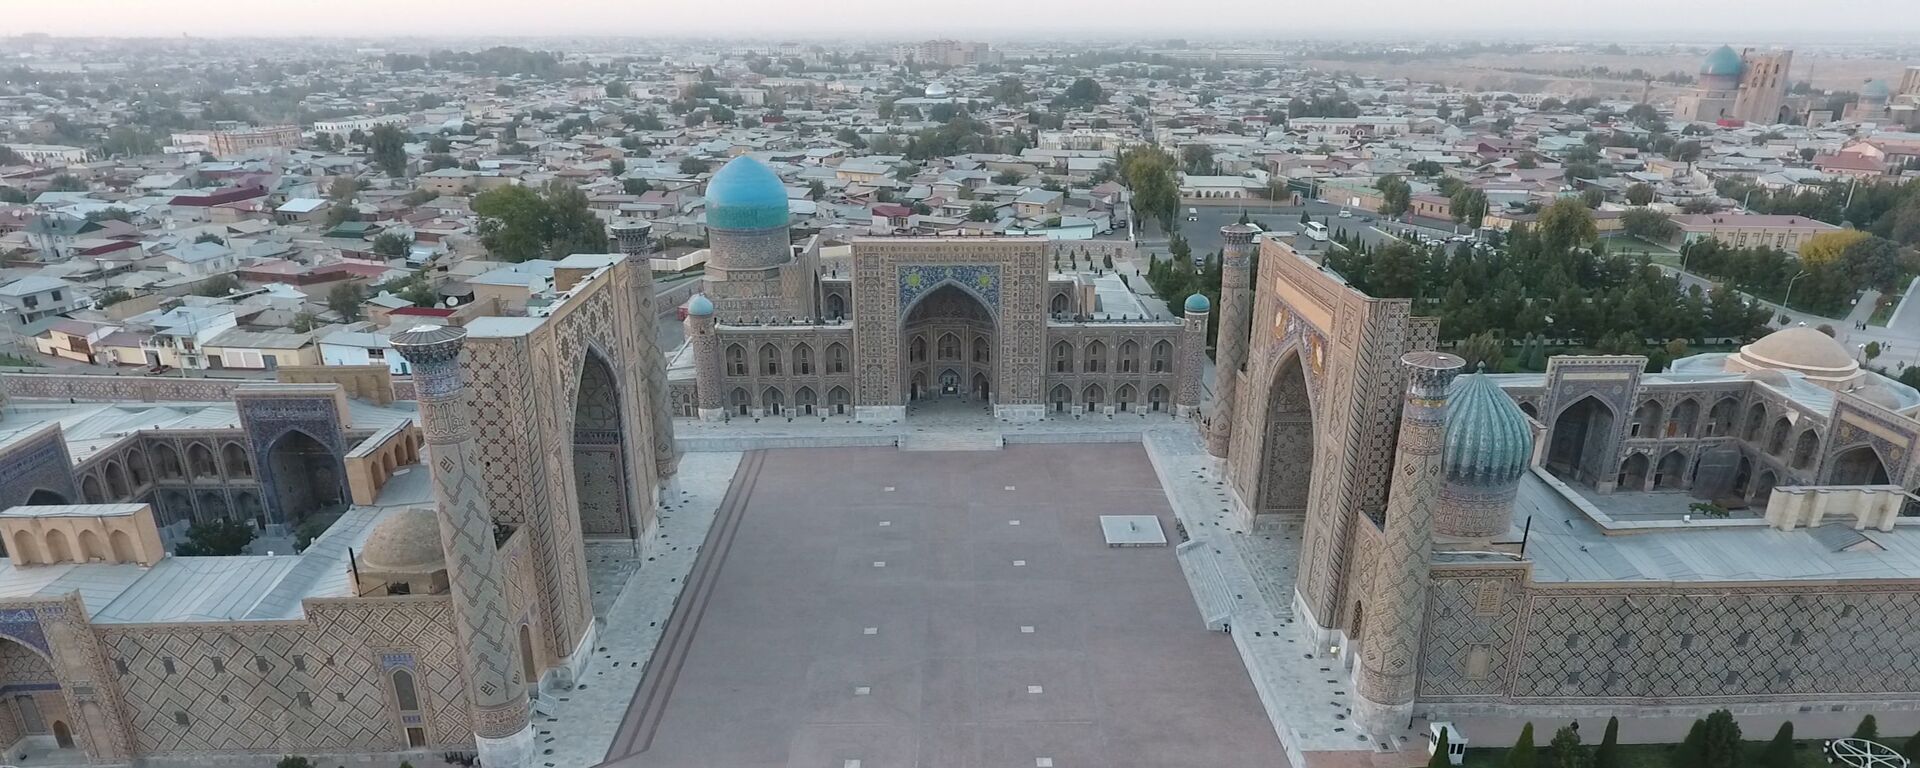 Вид сверху на площадь Регистан в Самарканде - Sputnik Ўзбекистон, 1920, 07.06.2021